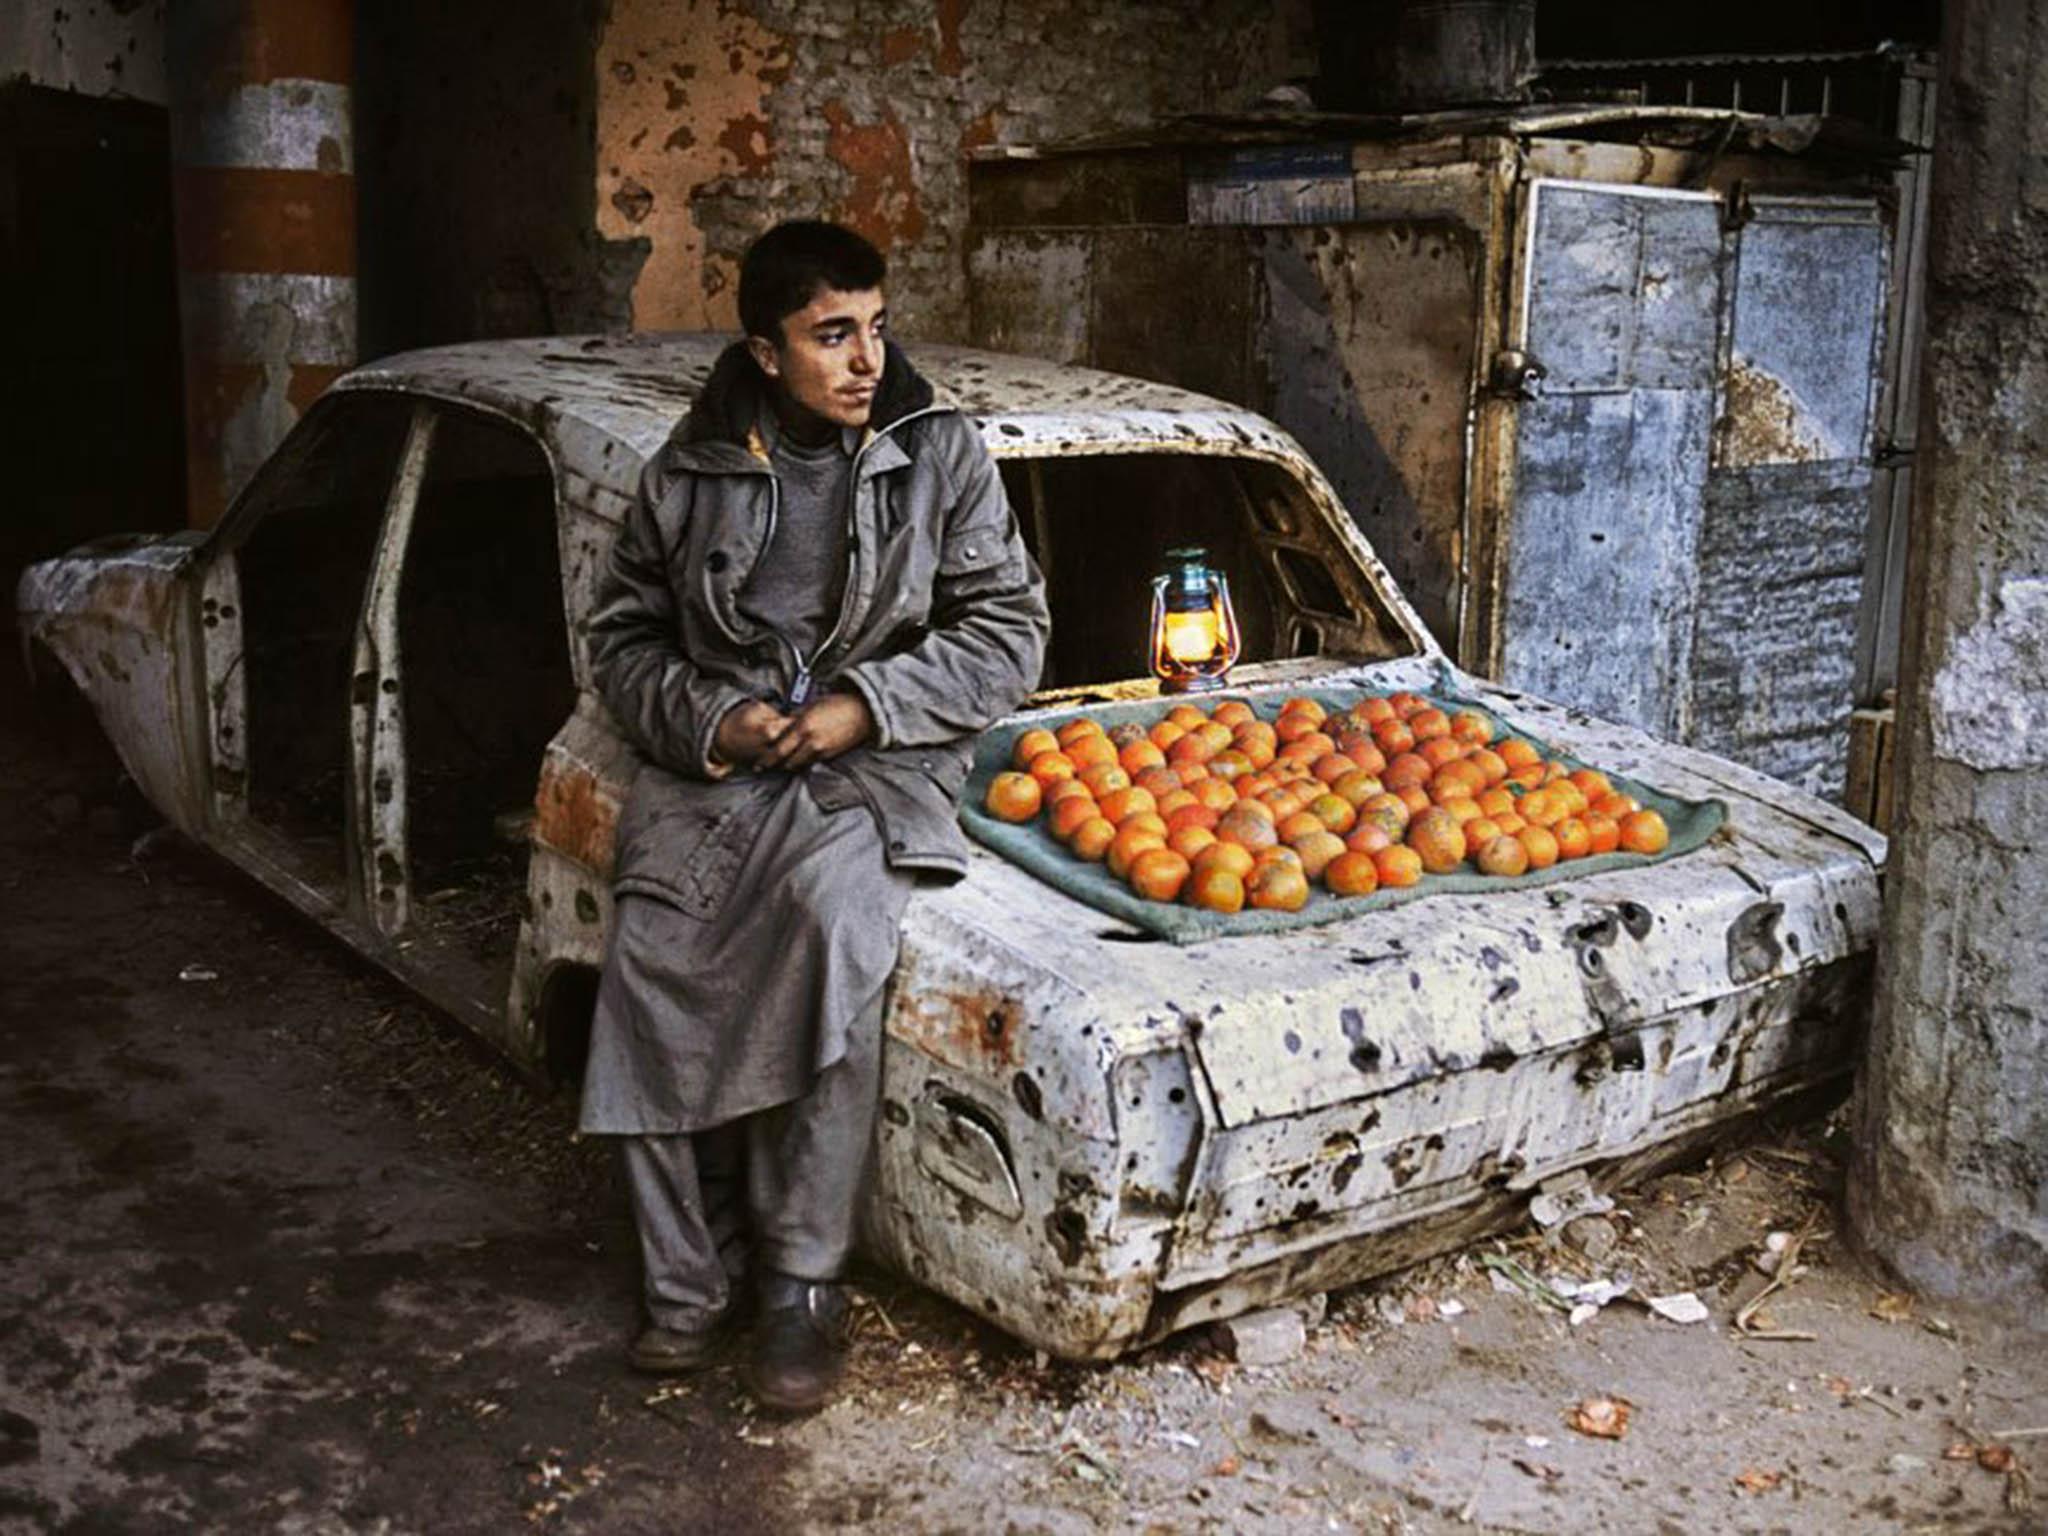 Afghanistan: Steve McCurry's retrospective look at a war-torn